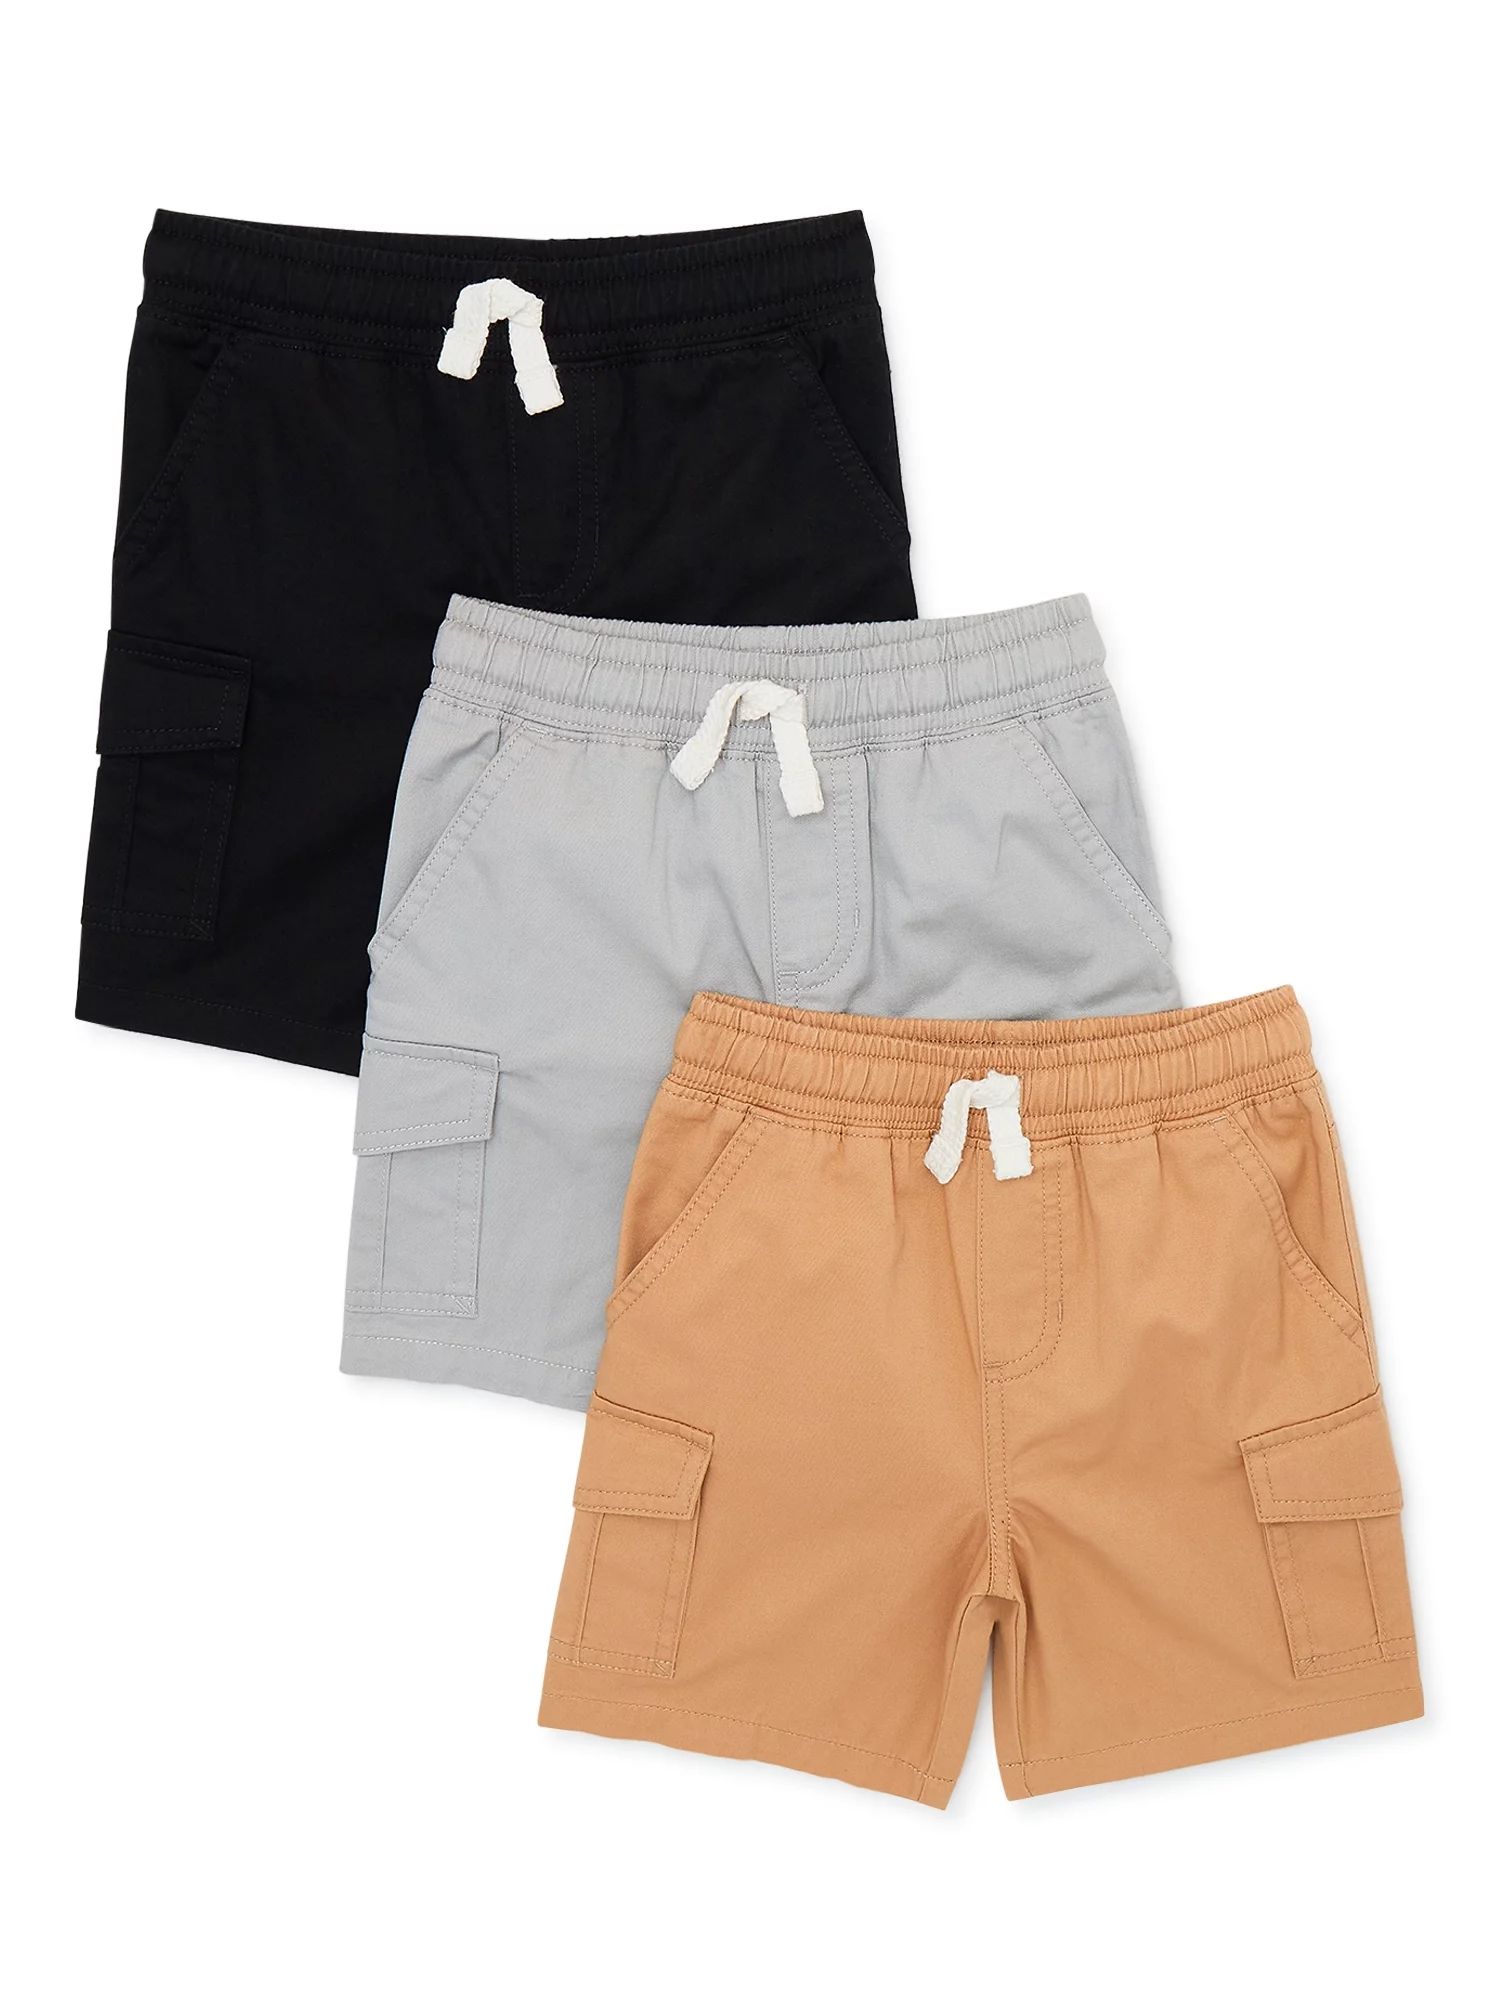 Garanimals Baby and Toddler Boys Cargo Shorts, 3-Pack, Sizes 12M-5T | Walmart (US)